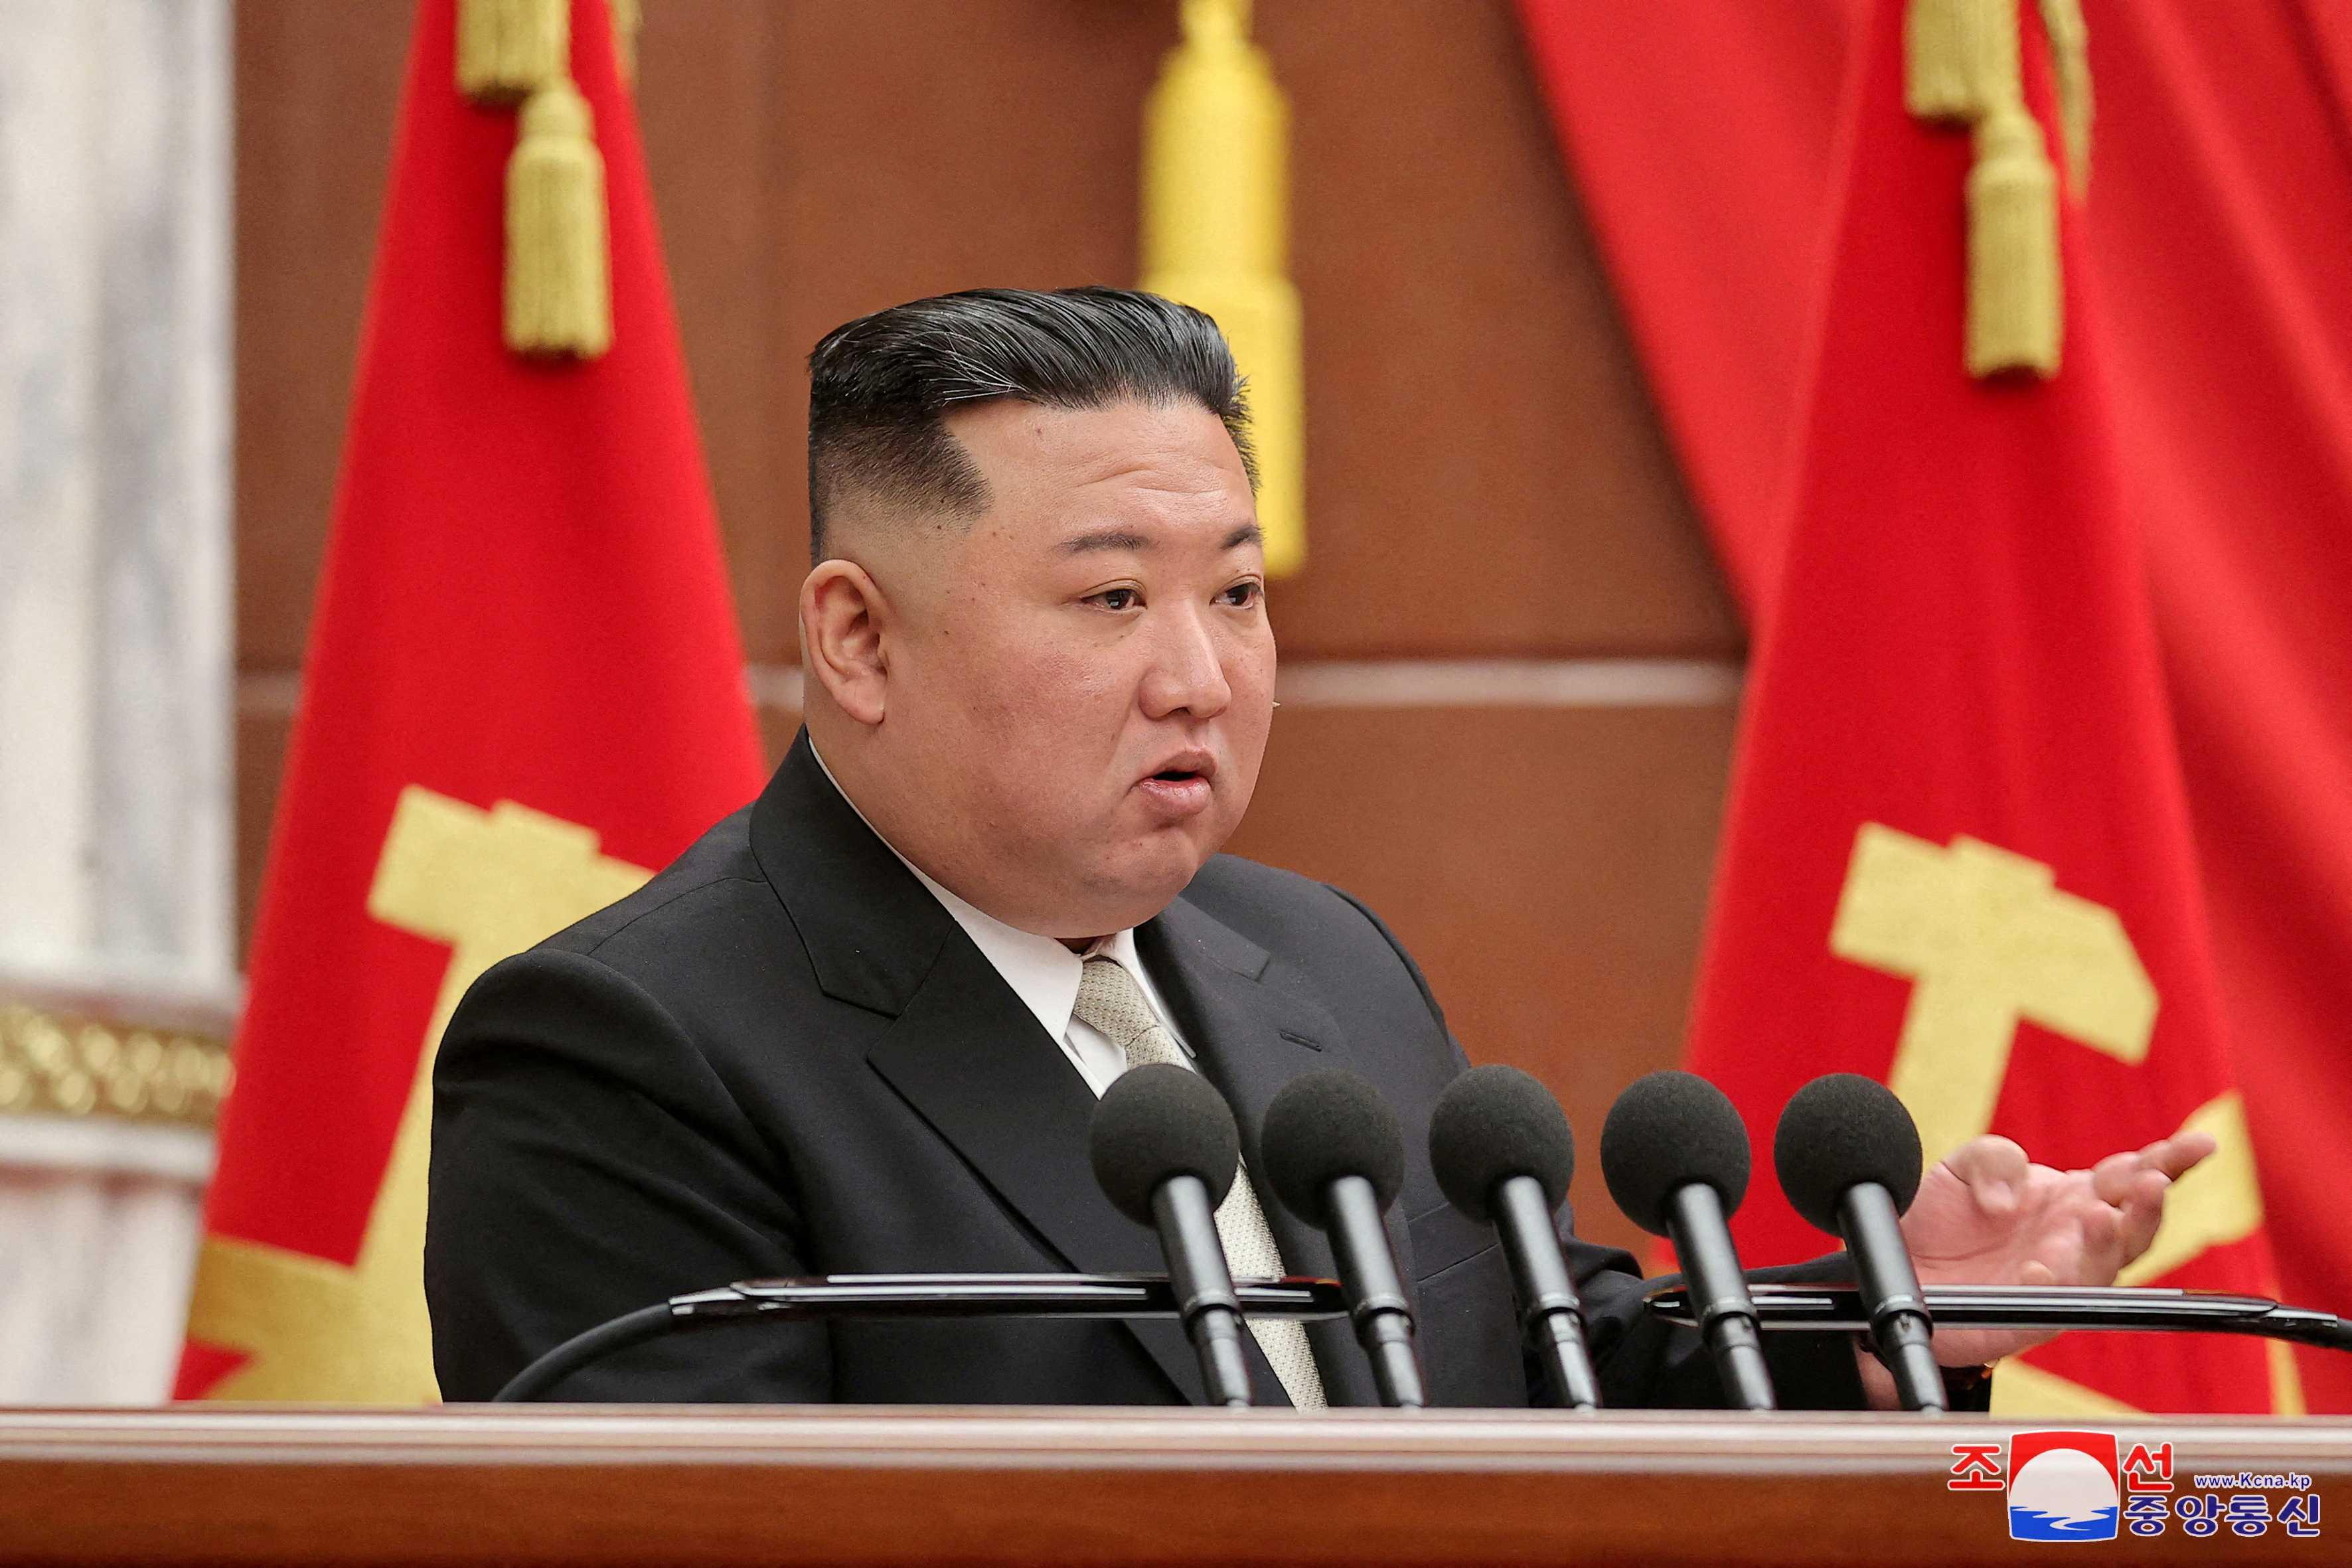 North Korean leader Kim Jong Un attends a meeting in Pyongyang, North Korea, March 1. Photo: Reuters